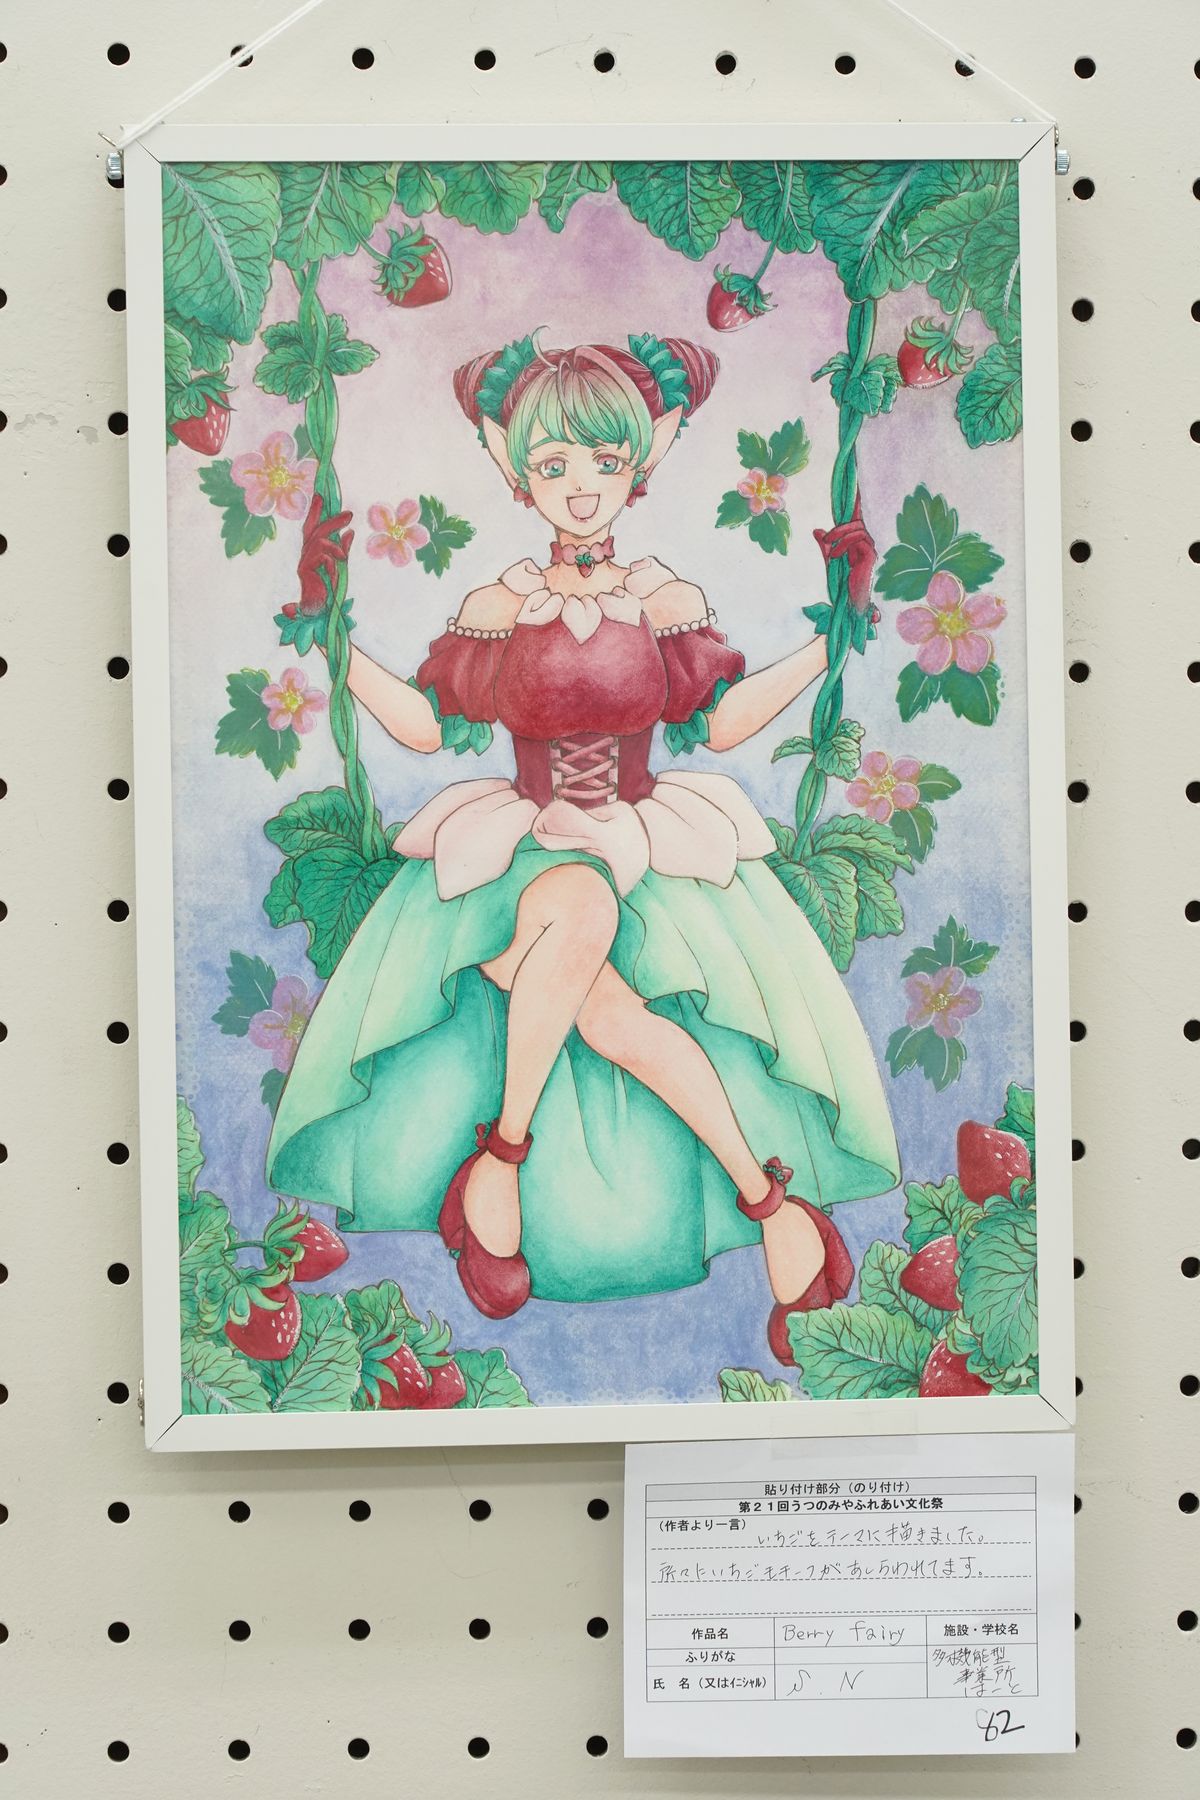 Berry Fairy(S.N)